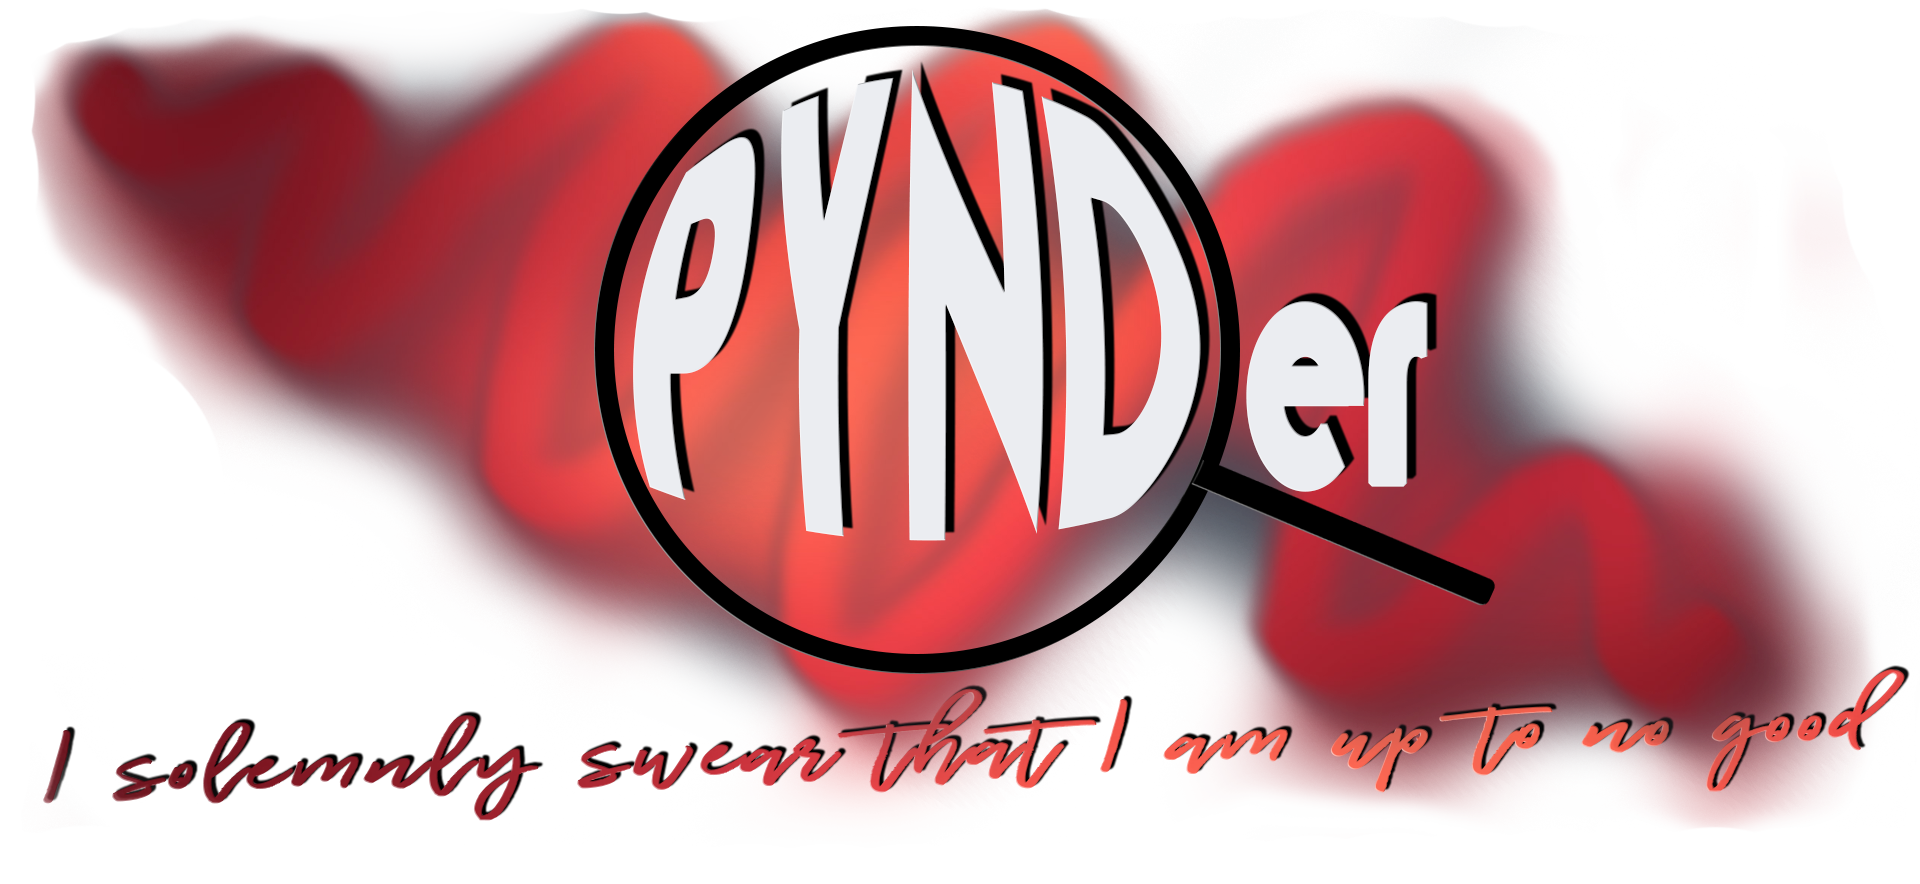 Pynder